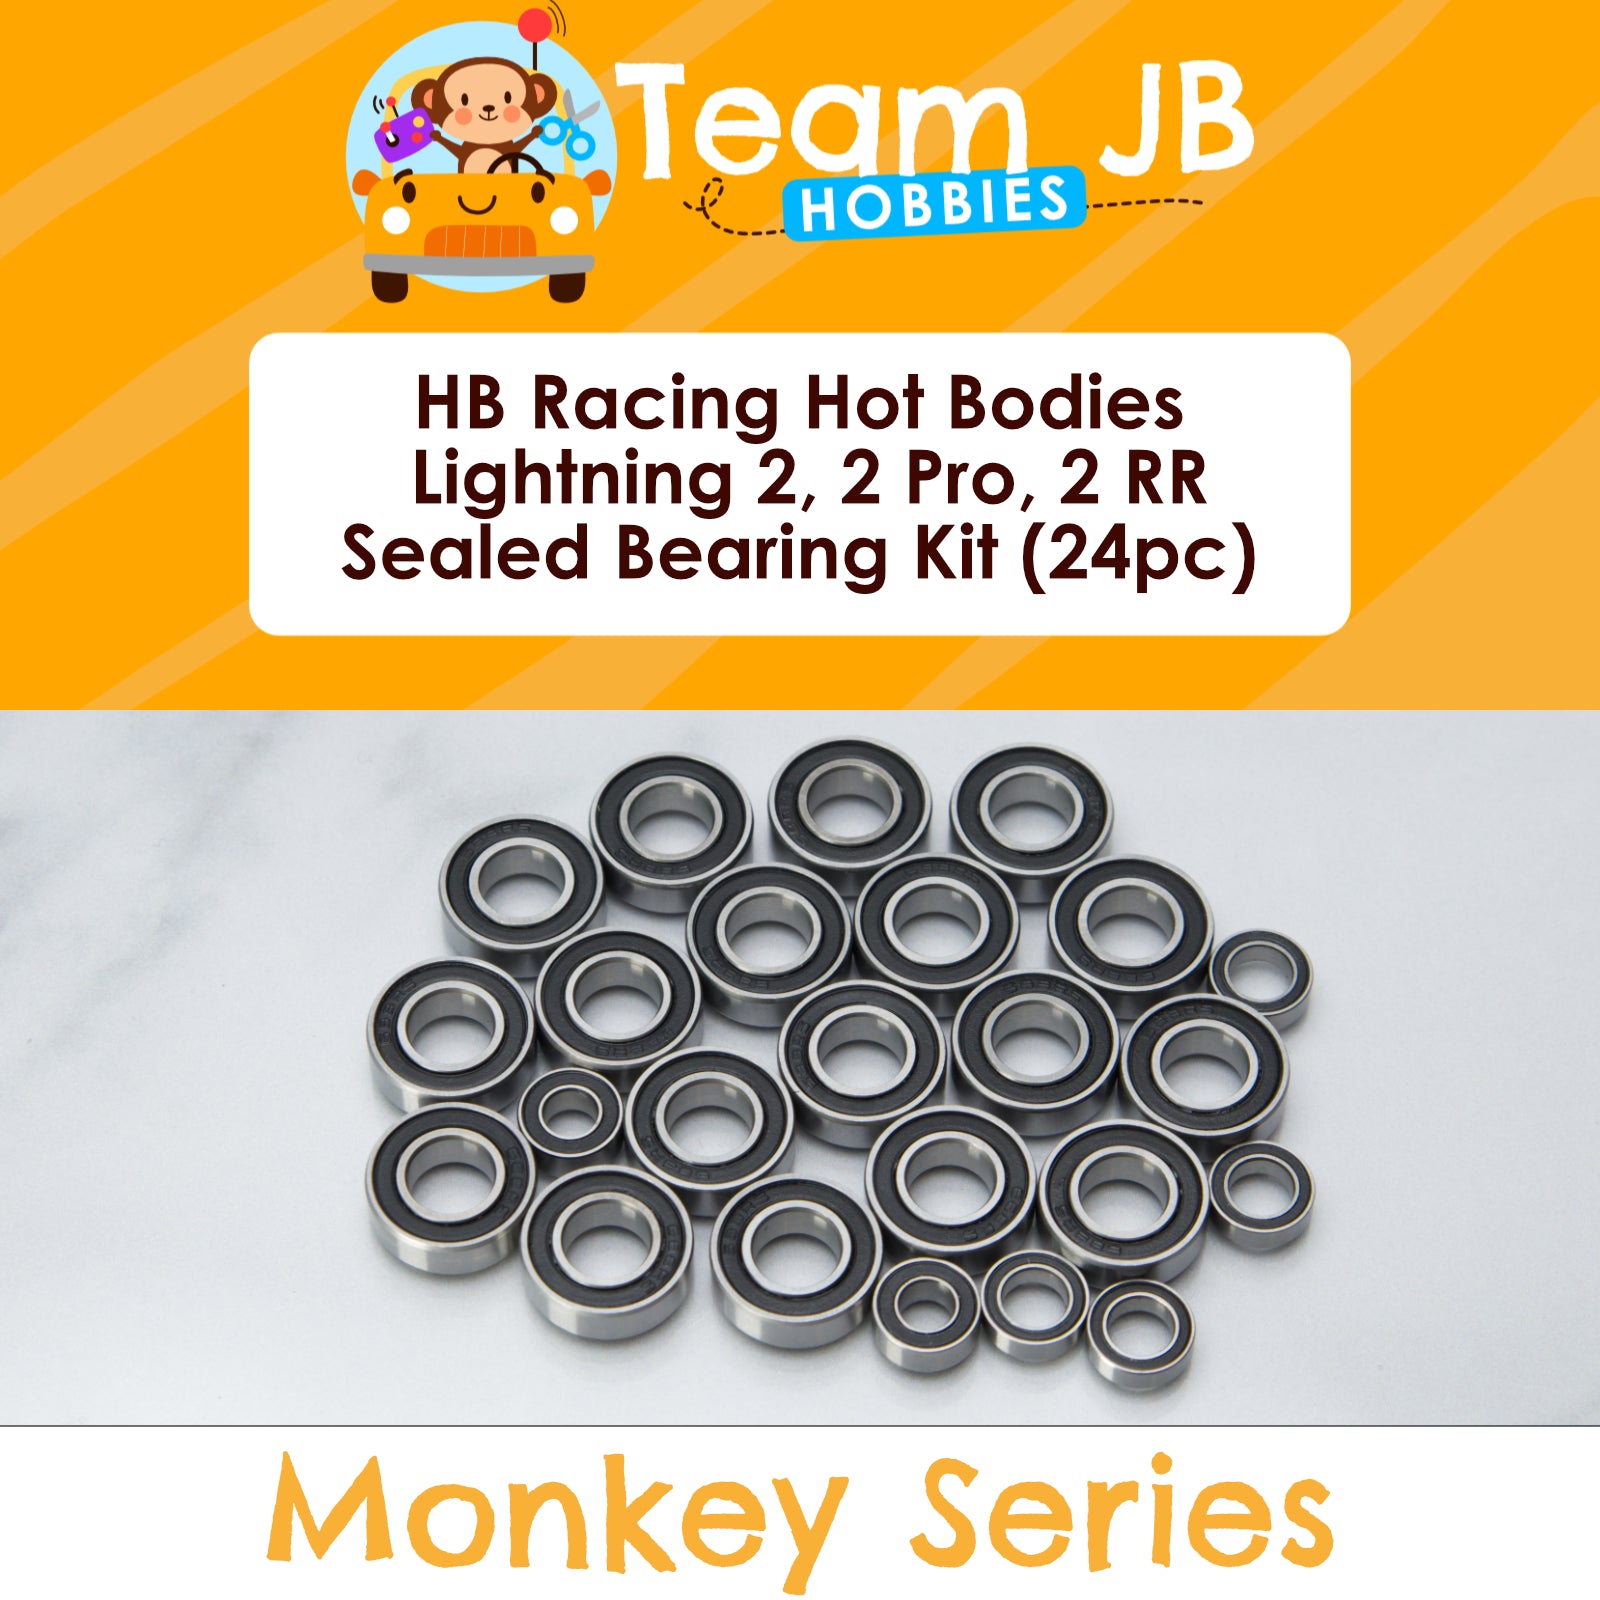 HB Racing Hot Bodies Lightning 2 Pro, Lightning 2 RR, Lightning 2 - Sealed Bearing Kit